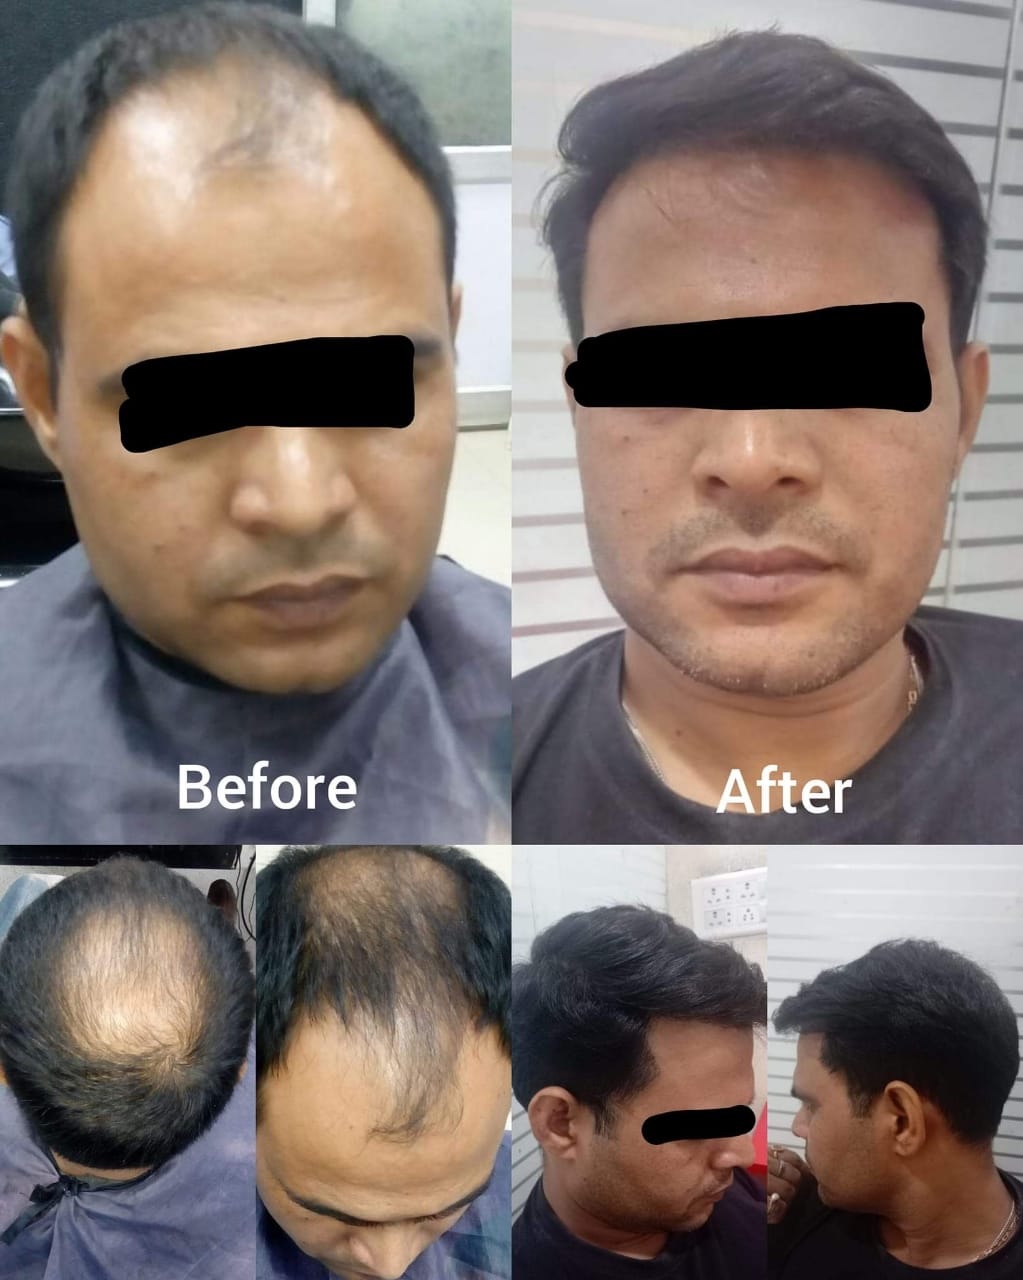 Sareen Hair Clinic - Hair Restoration Clinic in Greater Kailash Enclavei,  New Delhi, India 